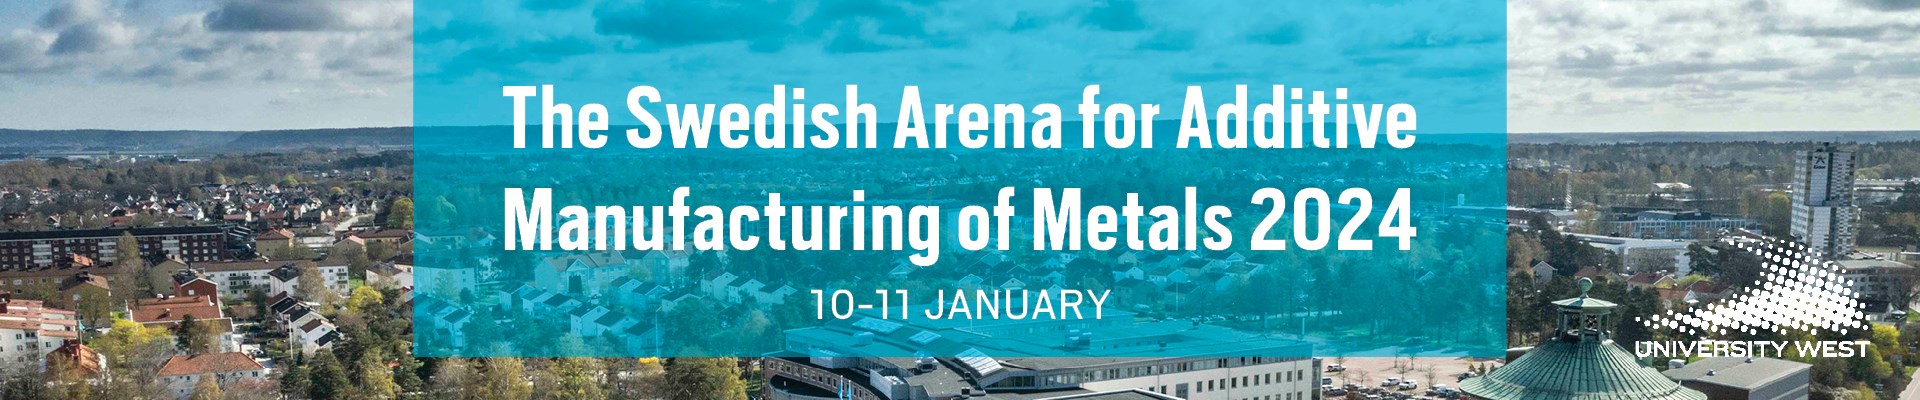 Toppbild om konferensen The Swedish Arena for Additive Manufacturing  of Metals 2024